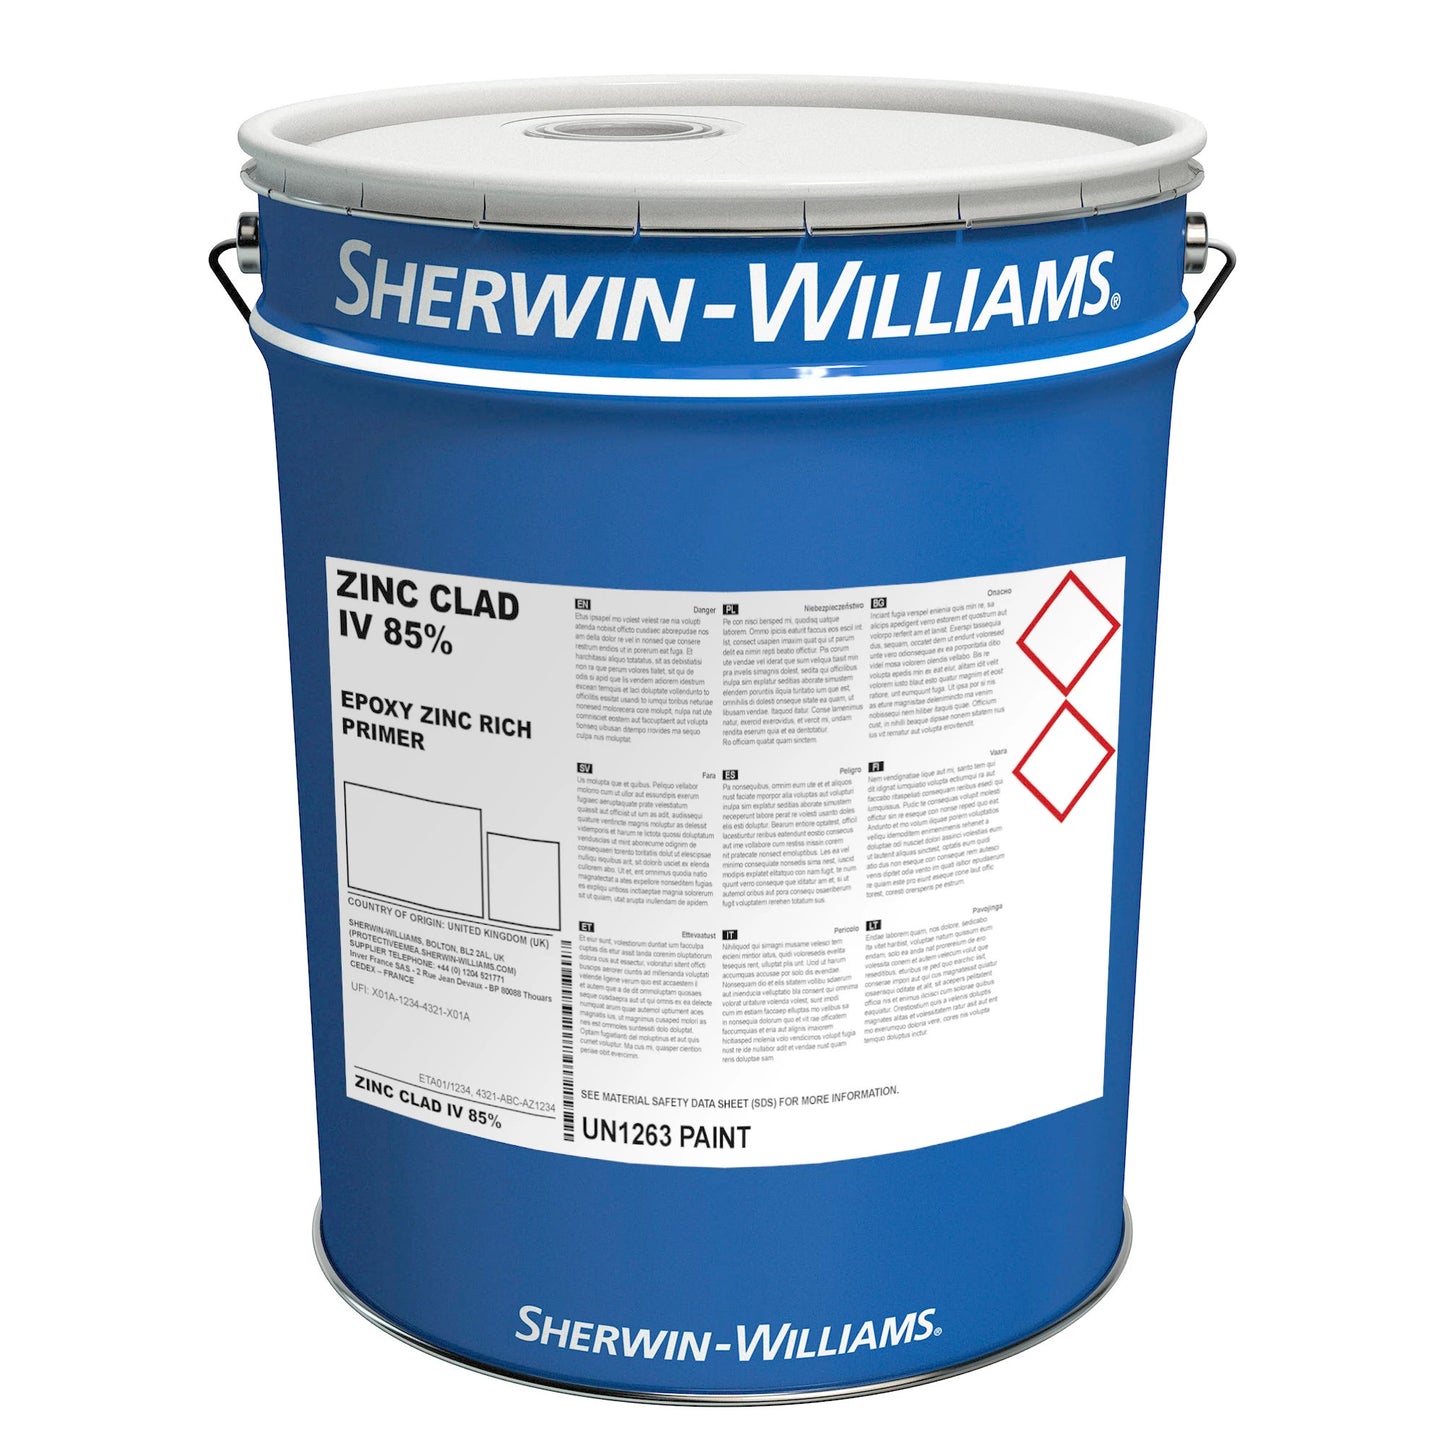 Sherwin-Williams Zinc Clad IV 85%